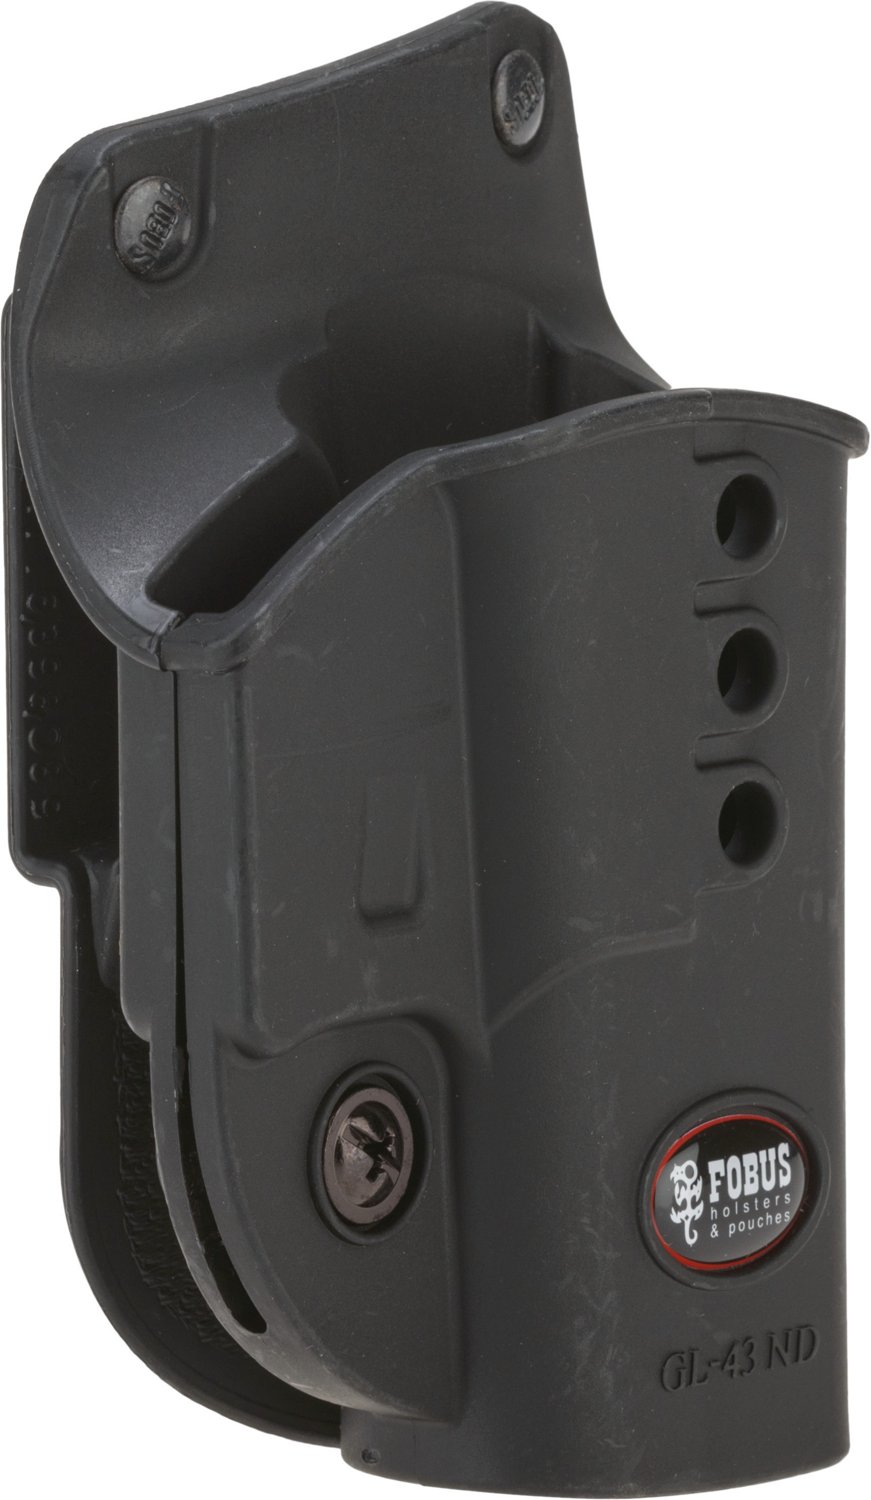 Fobus Model Gl-43nd Right Hand Black Paddle Holster for Glock 43 Design for sale online 